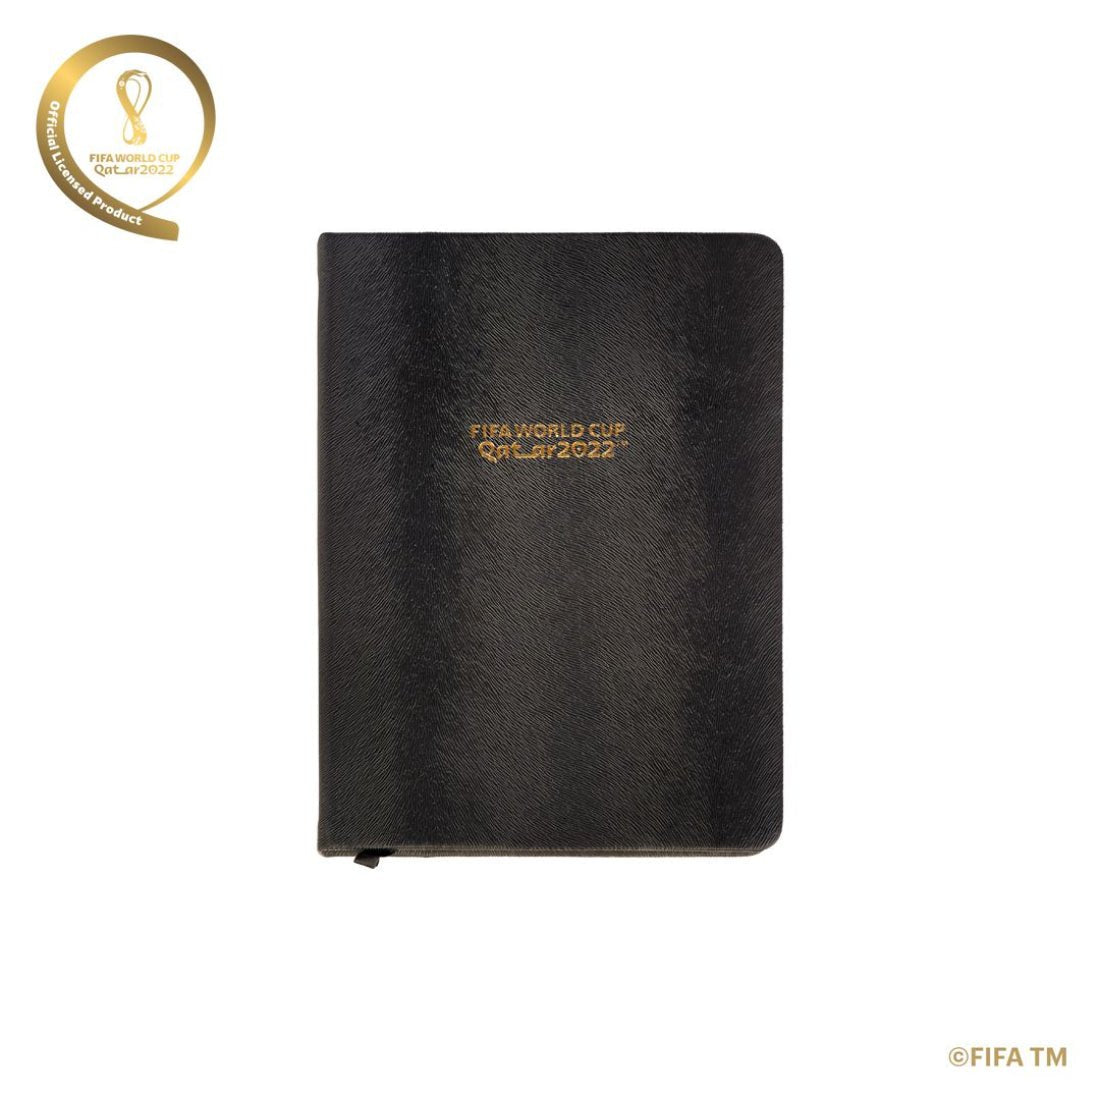 Qlive Premium Notebook with Emblem - FIFA World Cup Qatar 2022 - أكسسوار كأس العالم قطر 2022 - Store 974 | ستور ٩٧٤